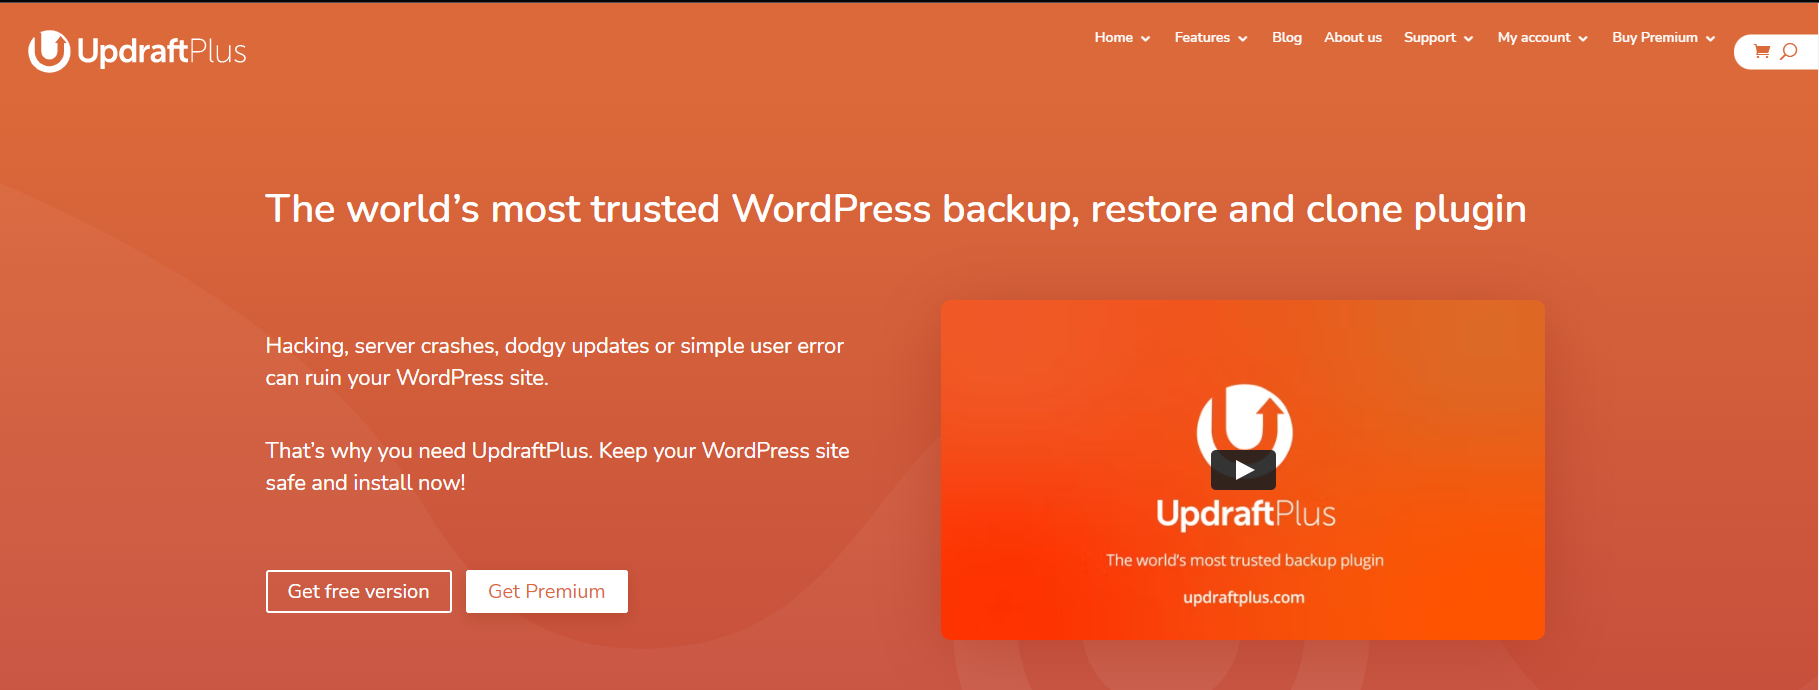 UpdraftPlus - Plugin backup nên cài cho WordPress